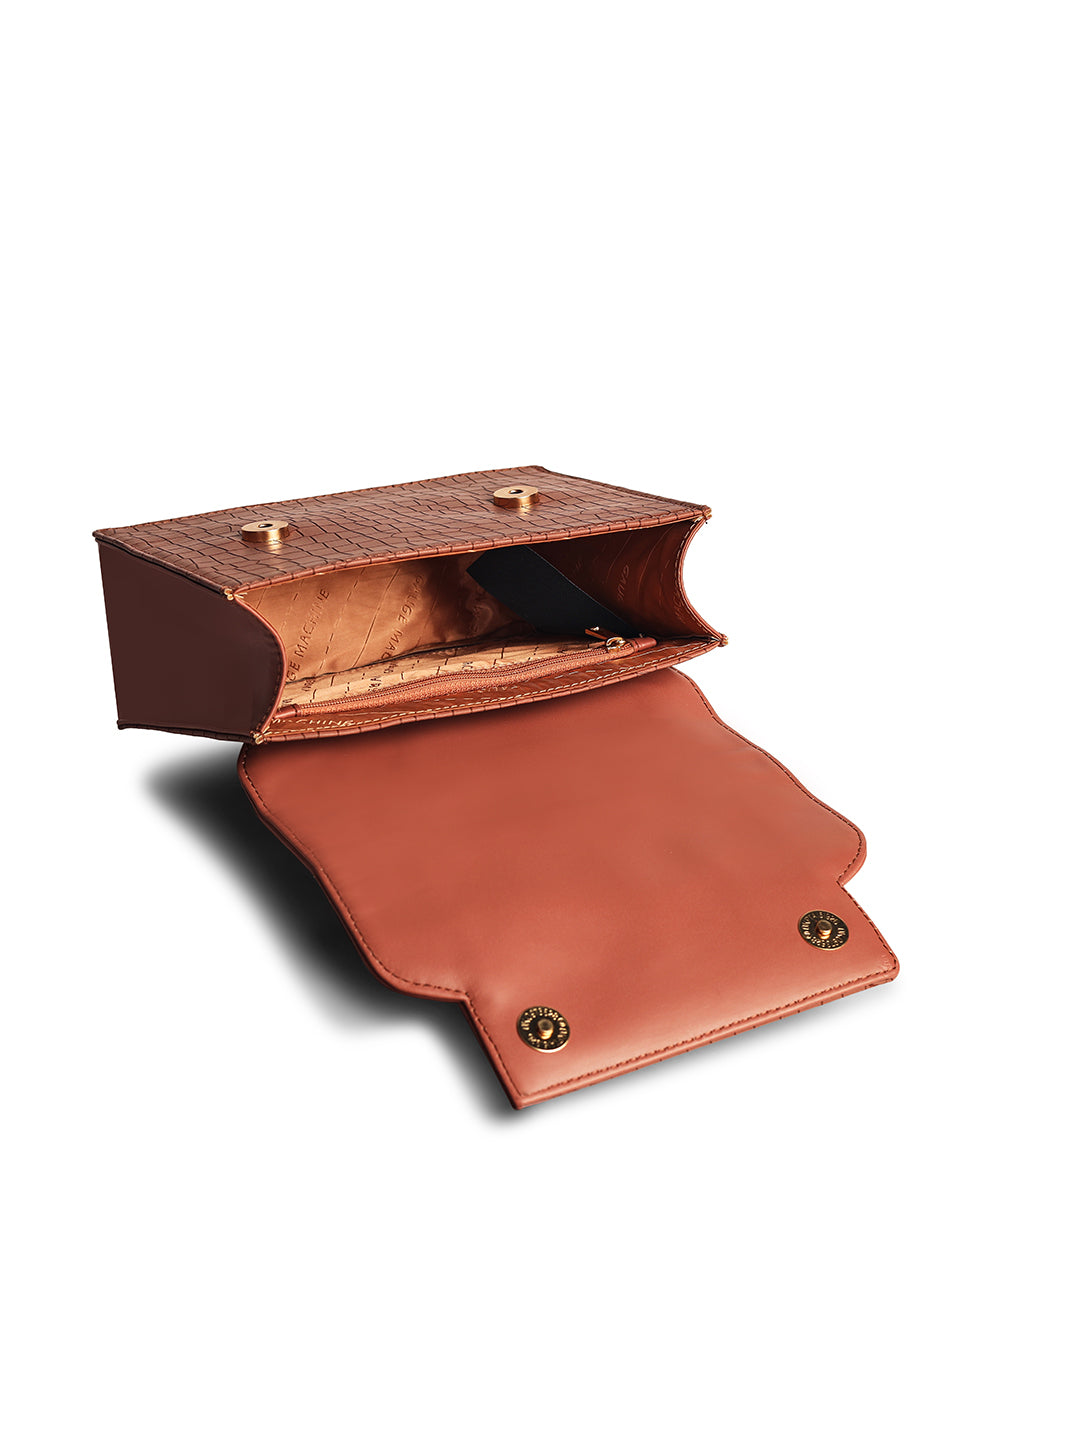 Gauge Machine Tan Luxurious Delight sling bag